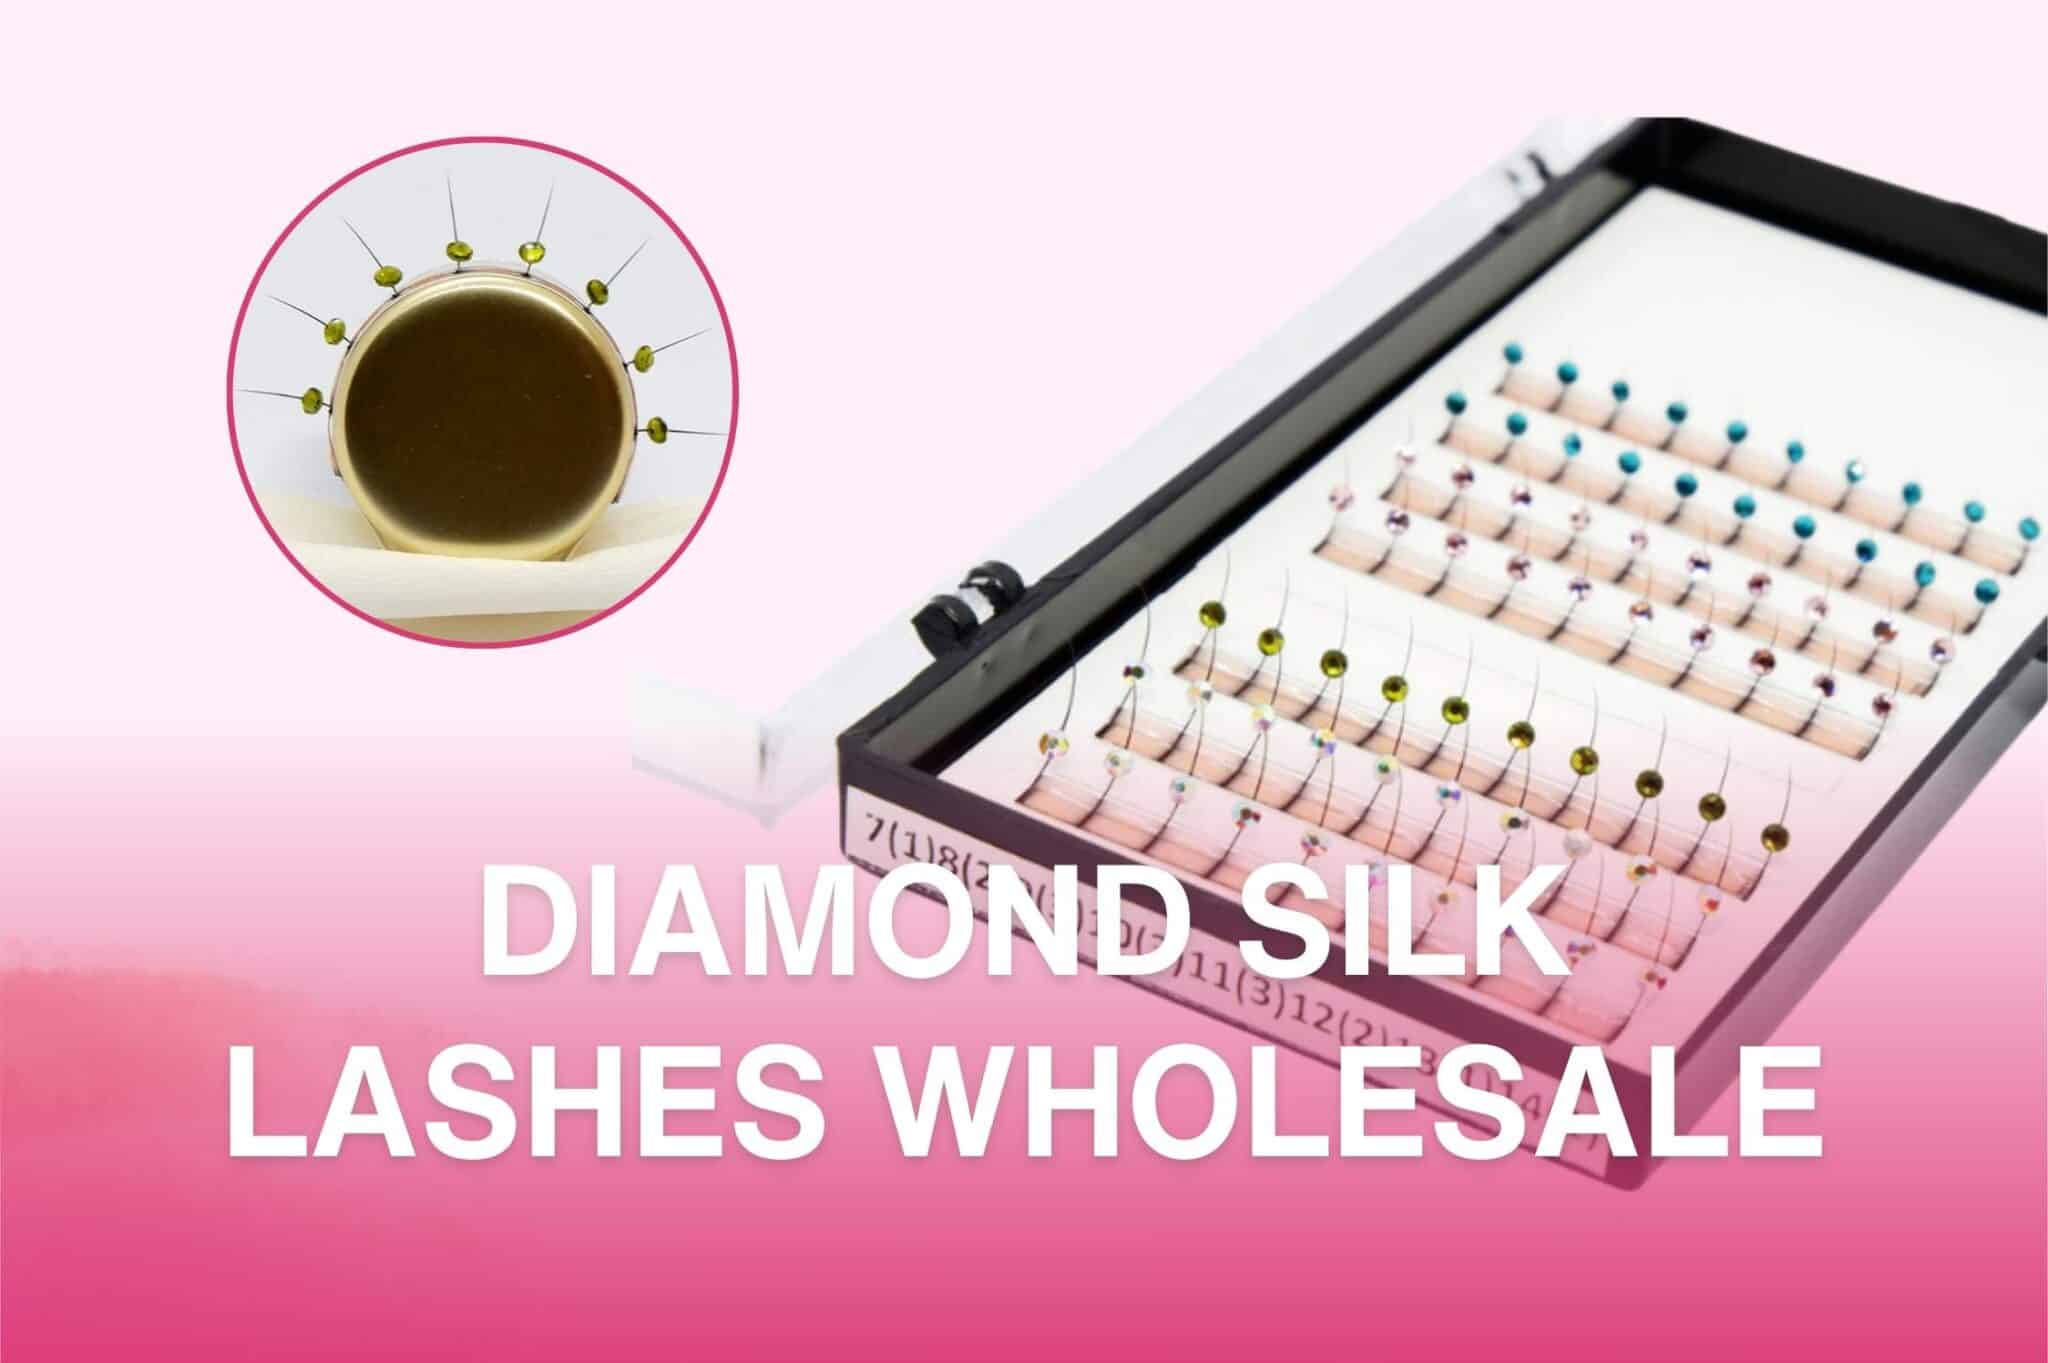 Diamond Silk Lashes Wholesale tag